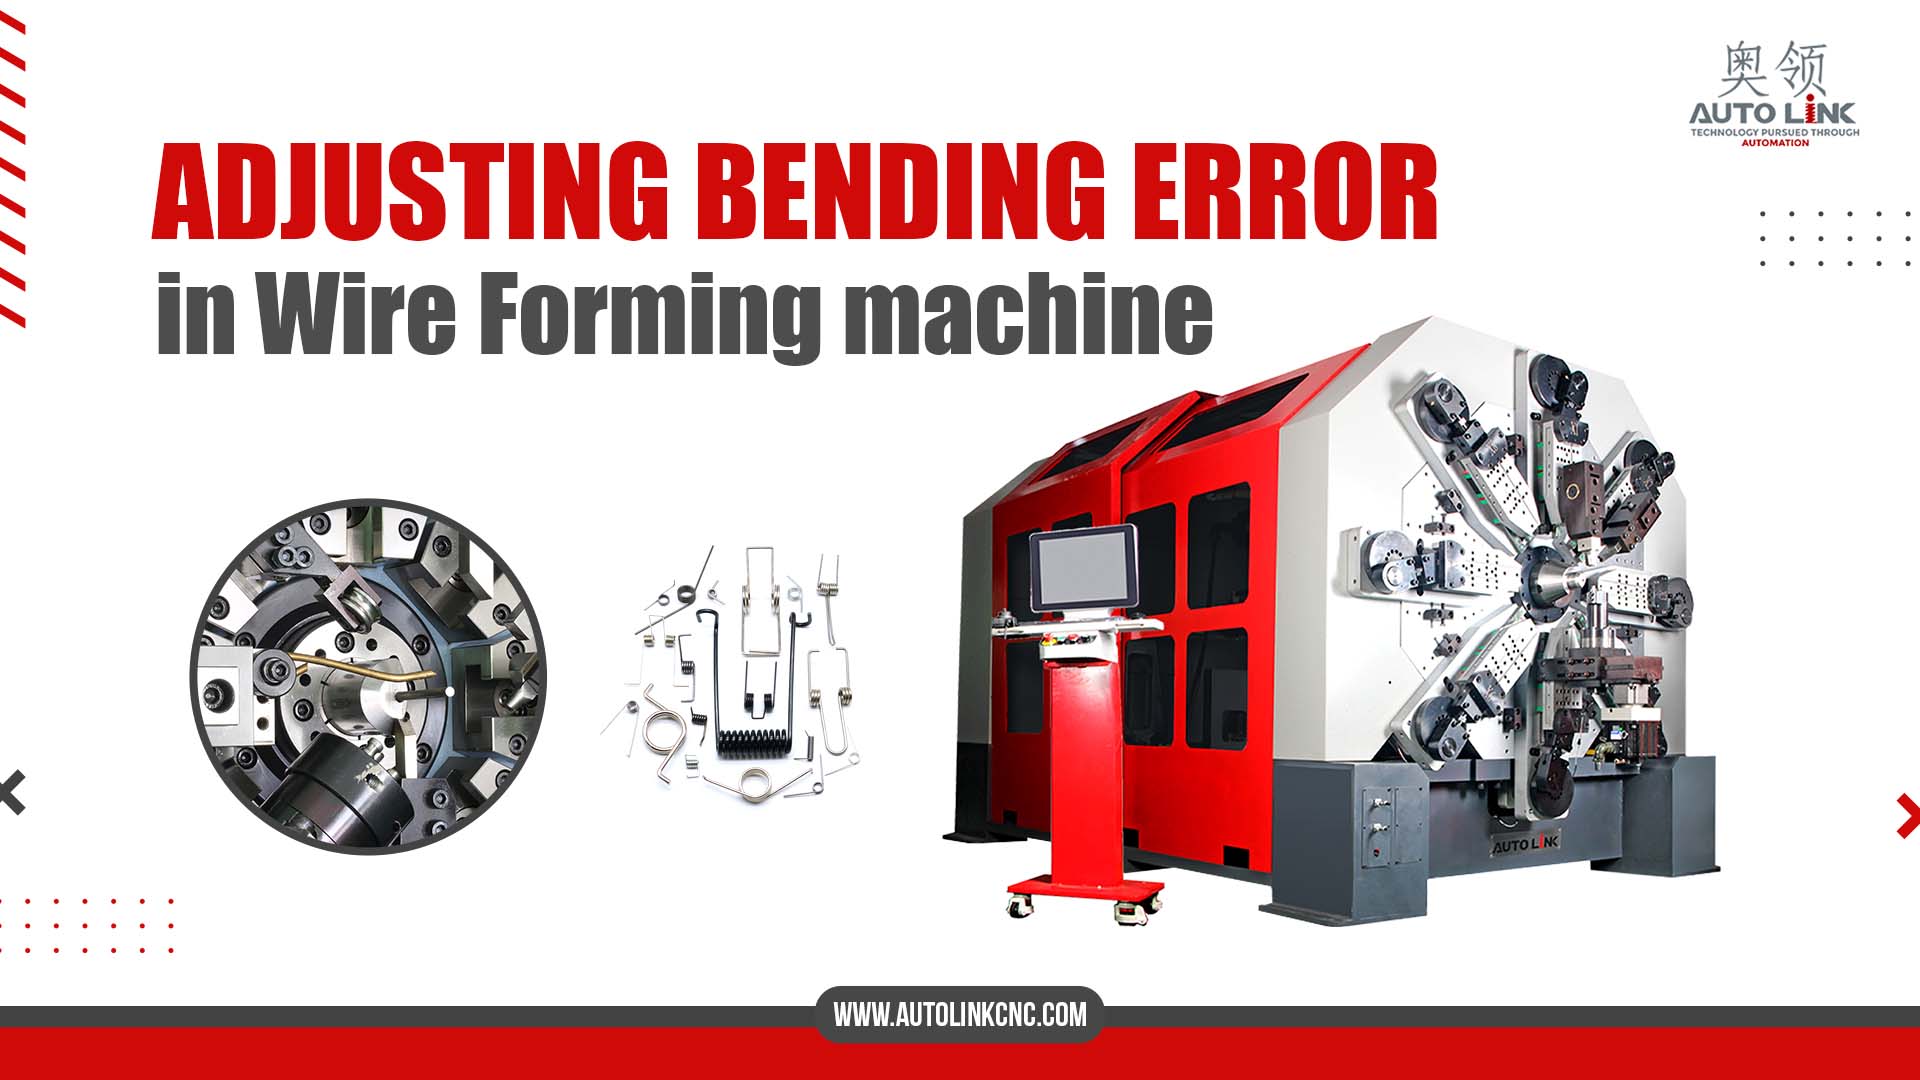 Adjusting Bending Error in wire forming machine